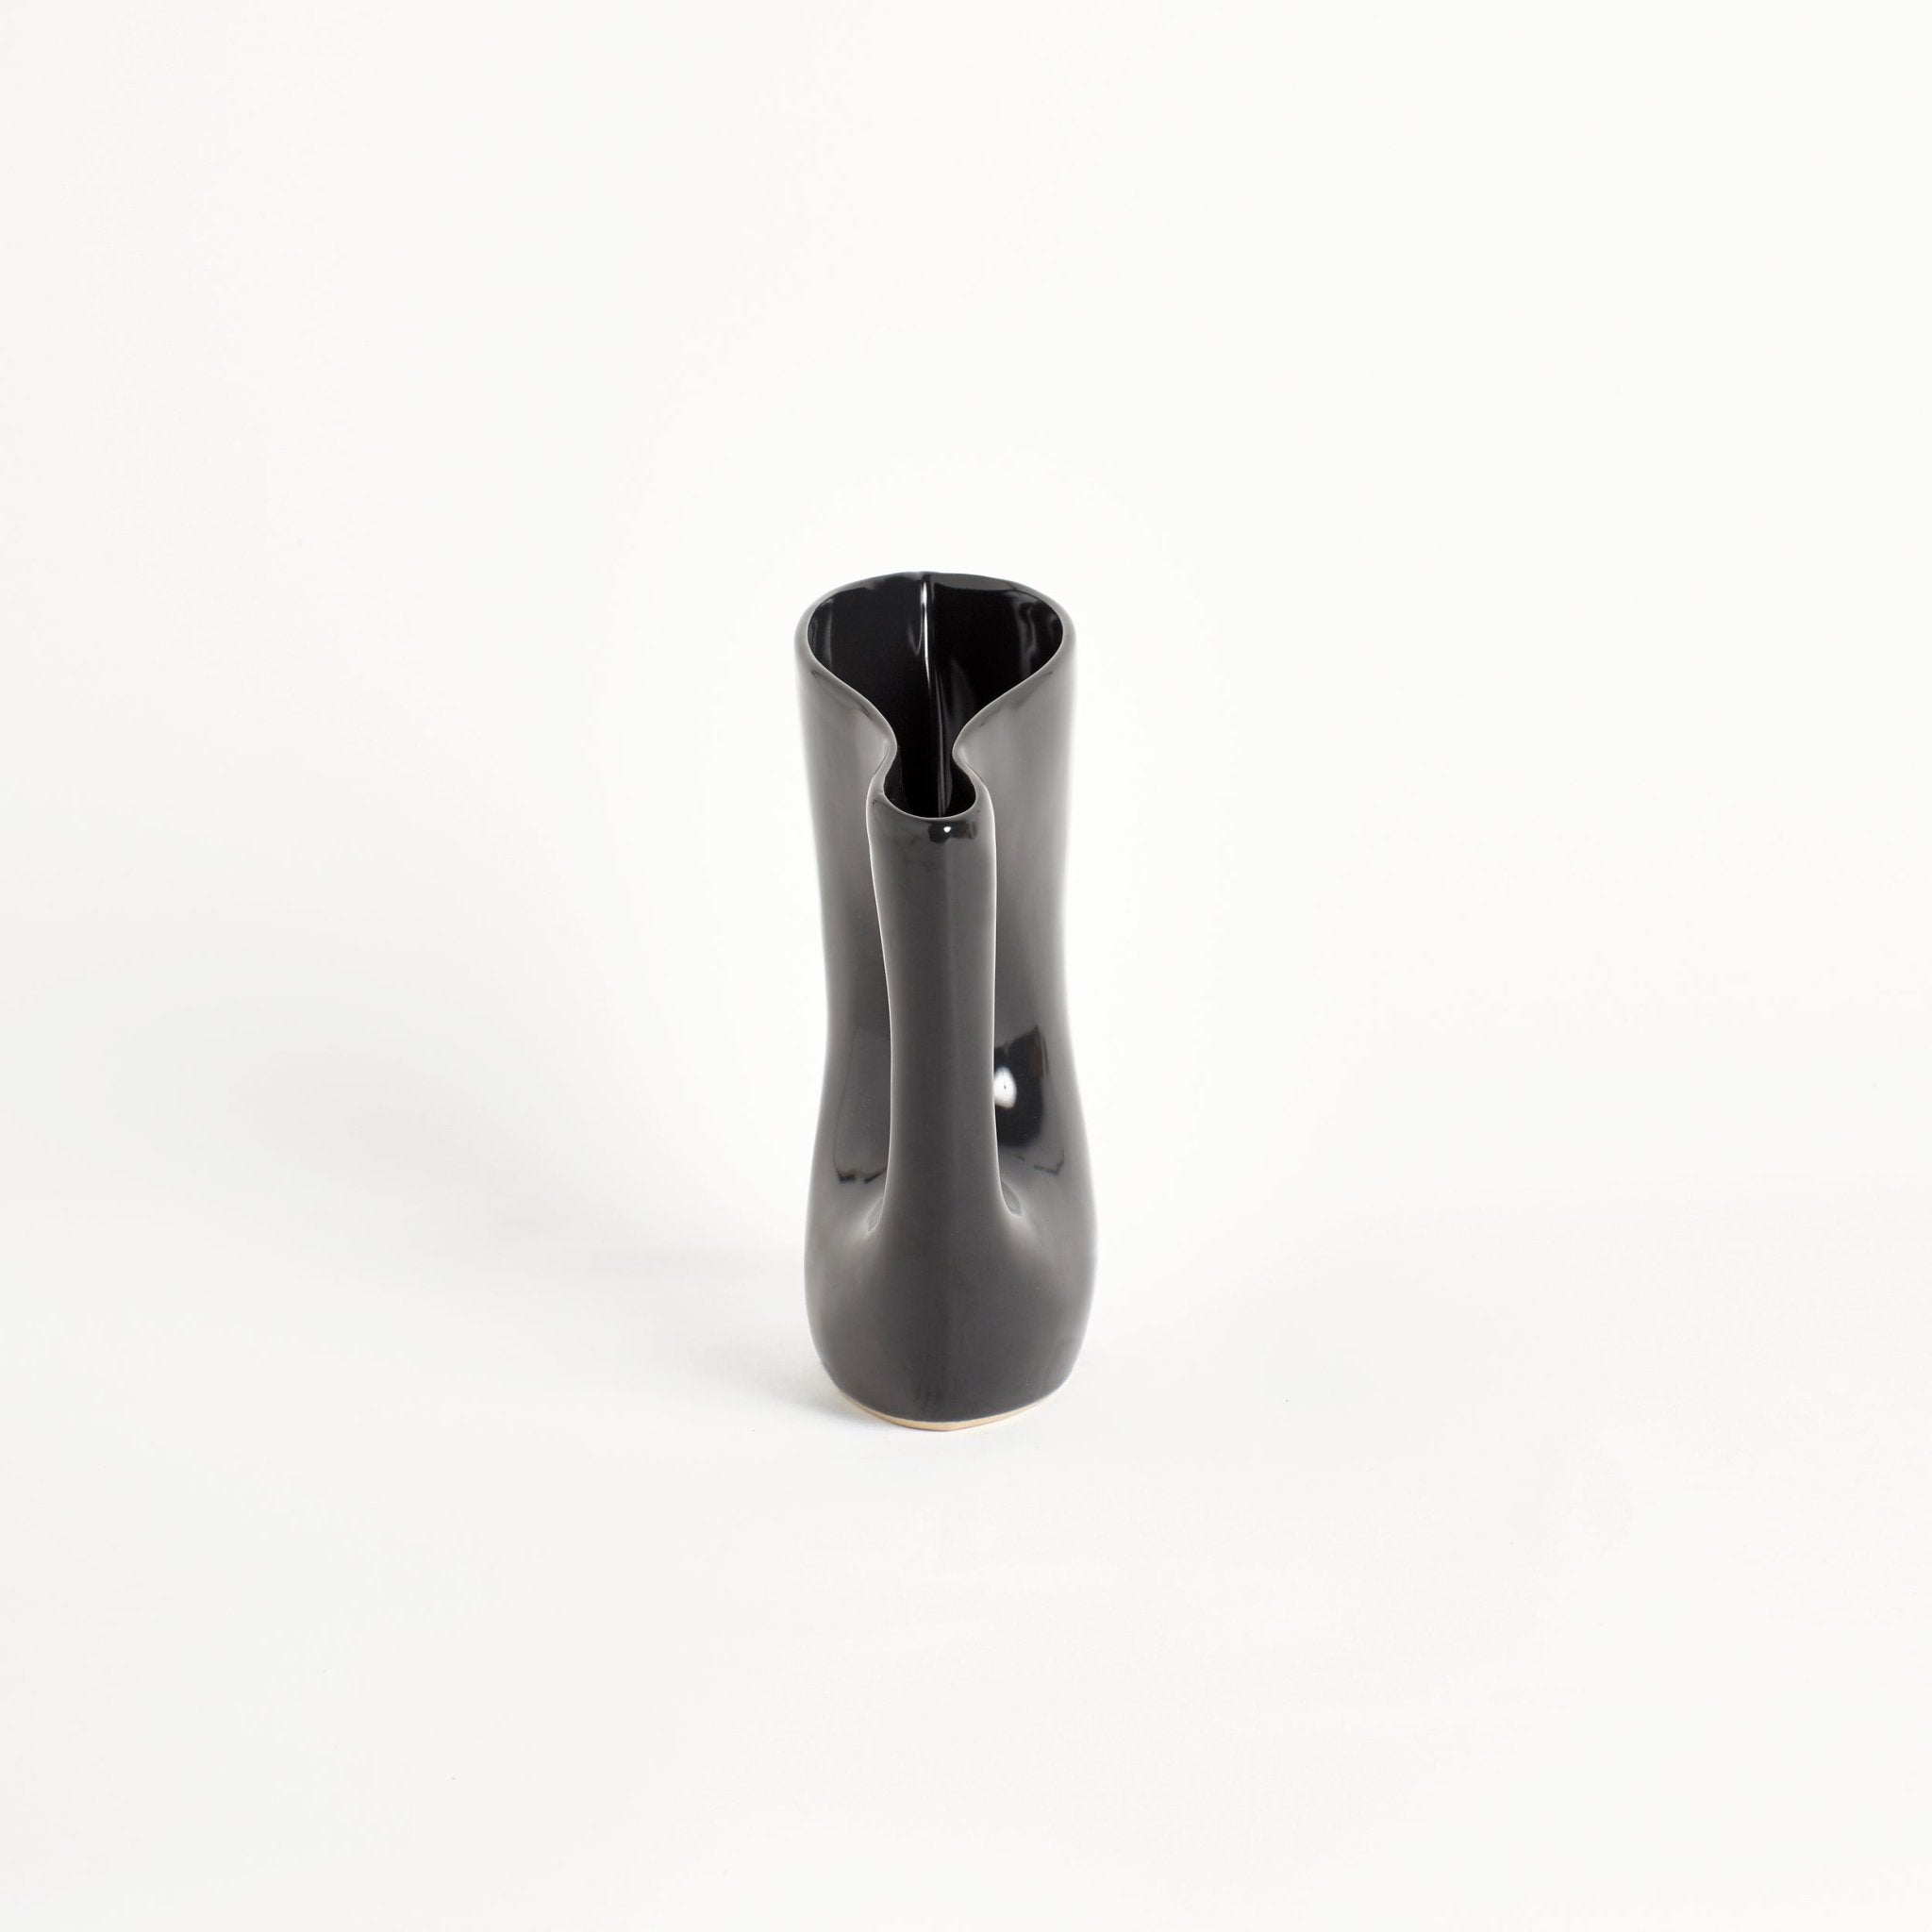 Mamasita Jug - Black vase by Project 213A